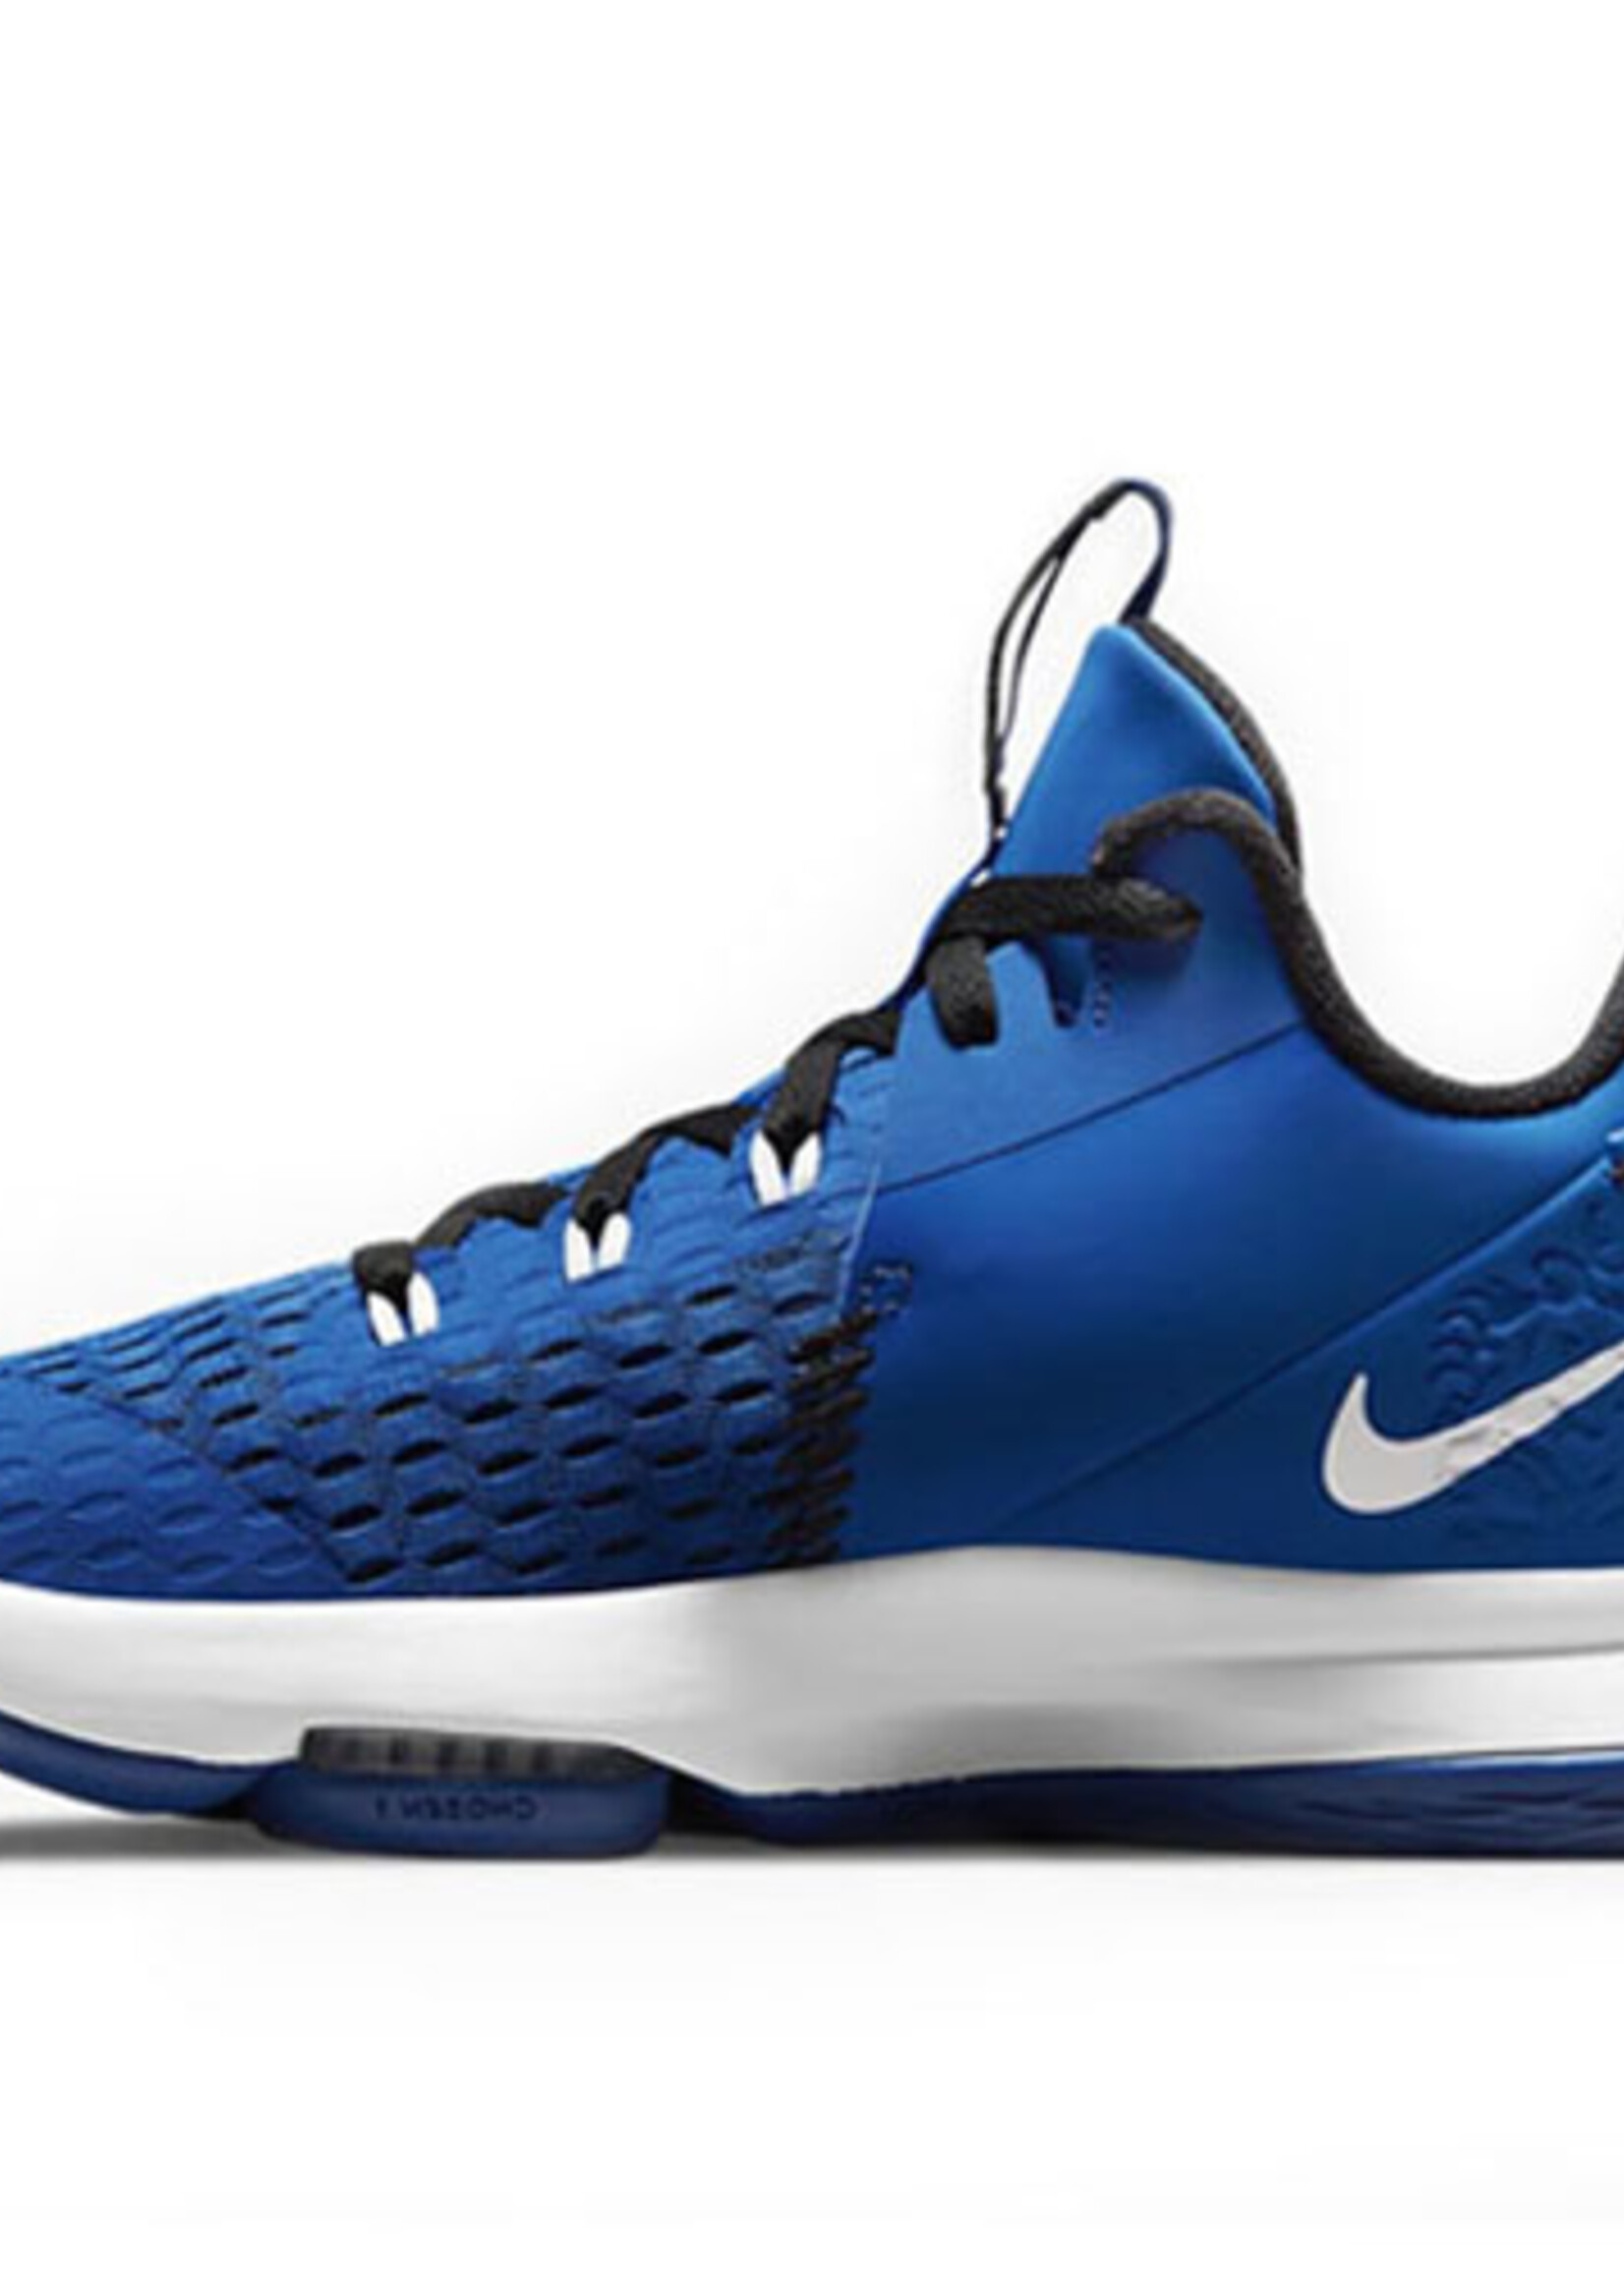 Nike LeBron Witness 5 Royal Blau Weiss